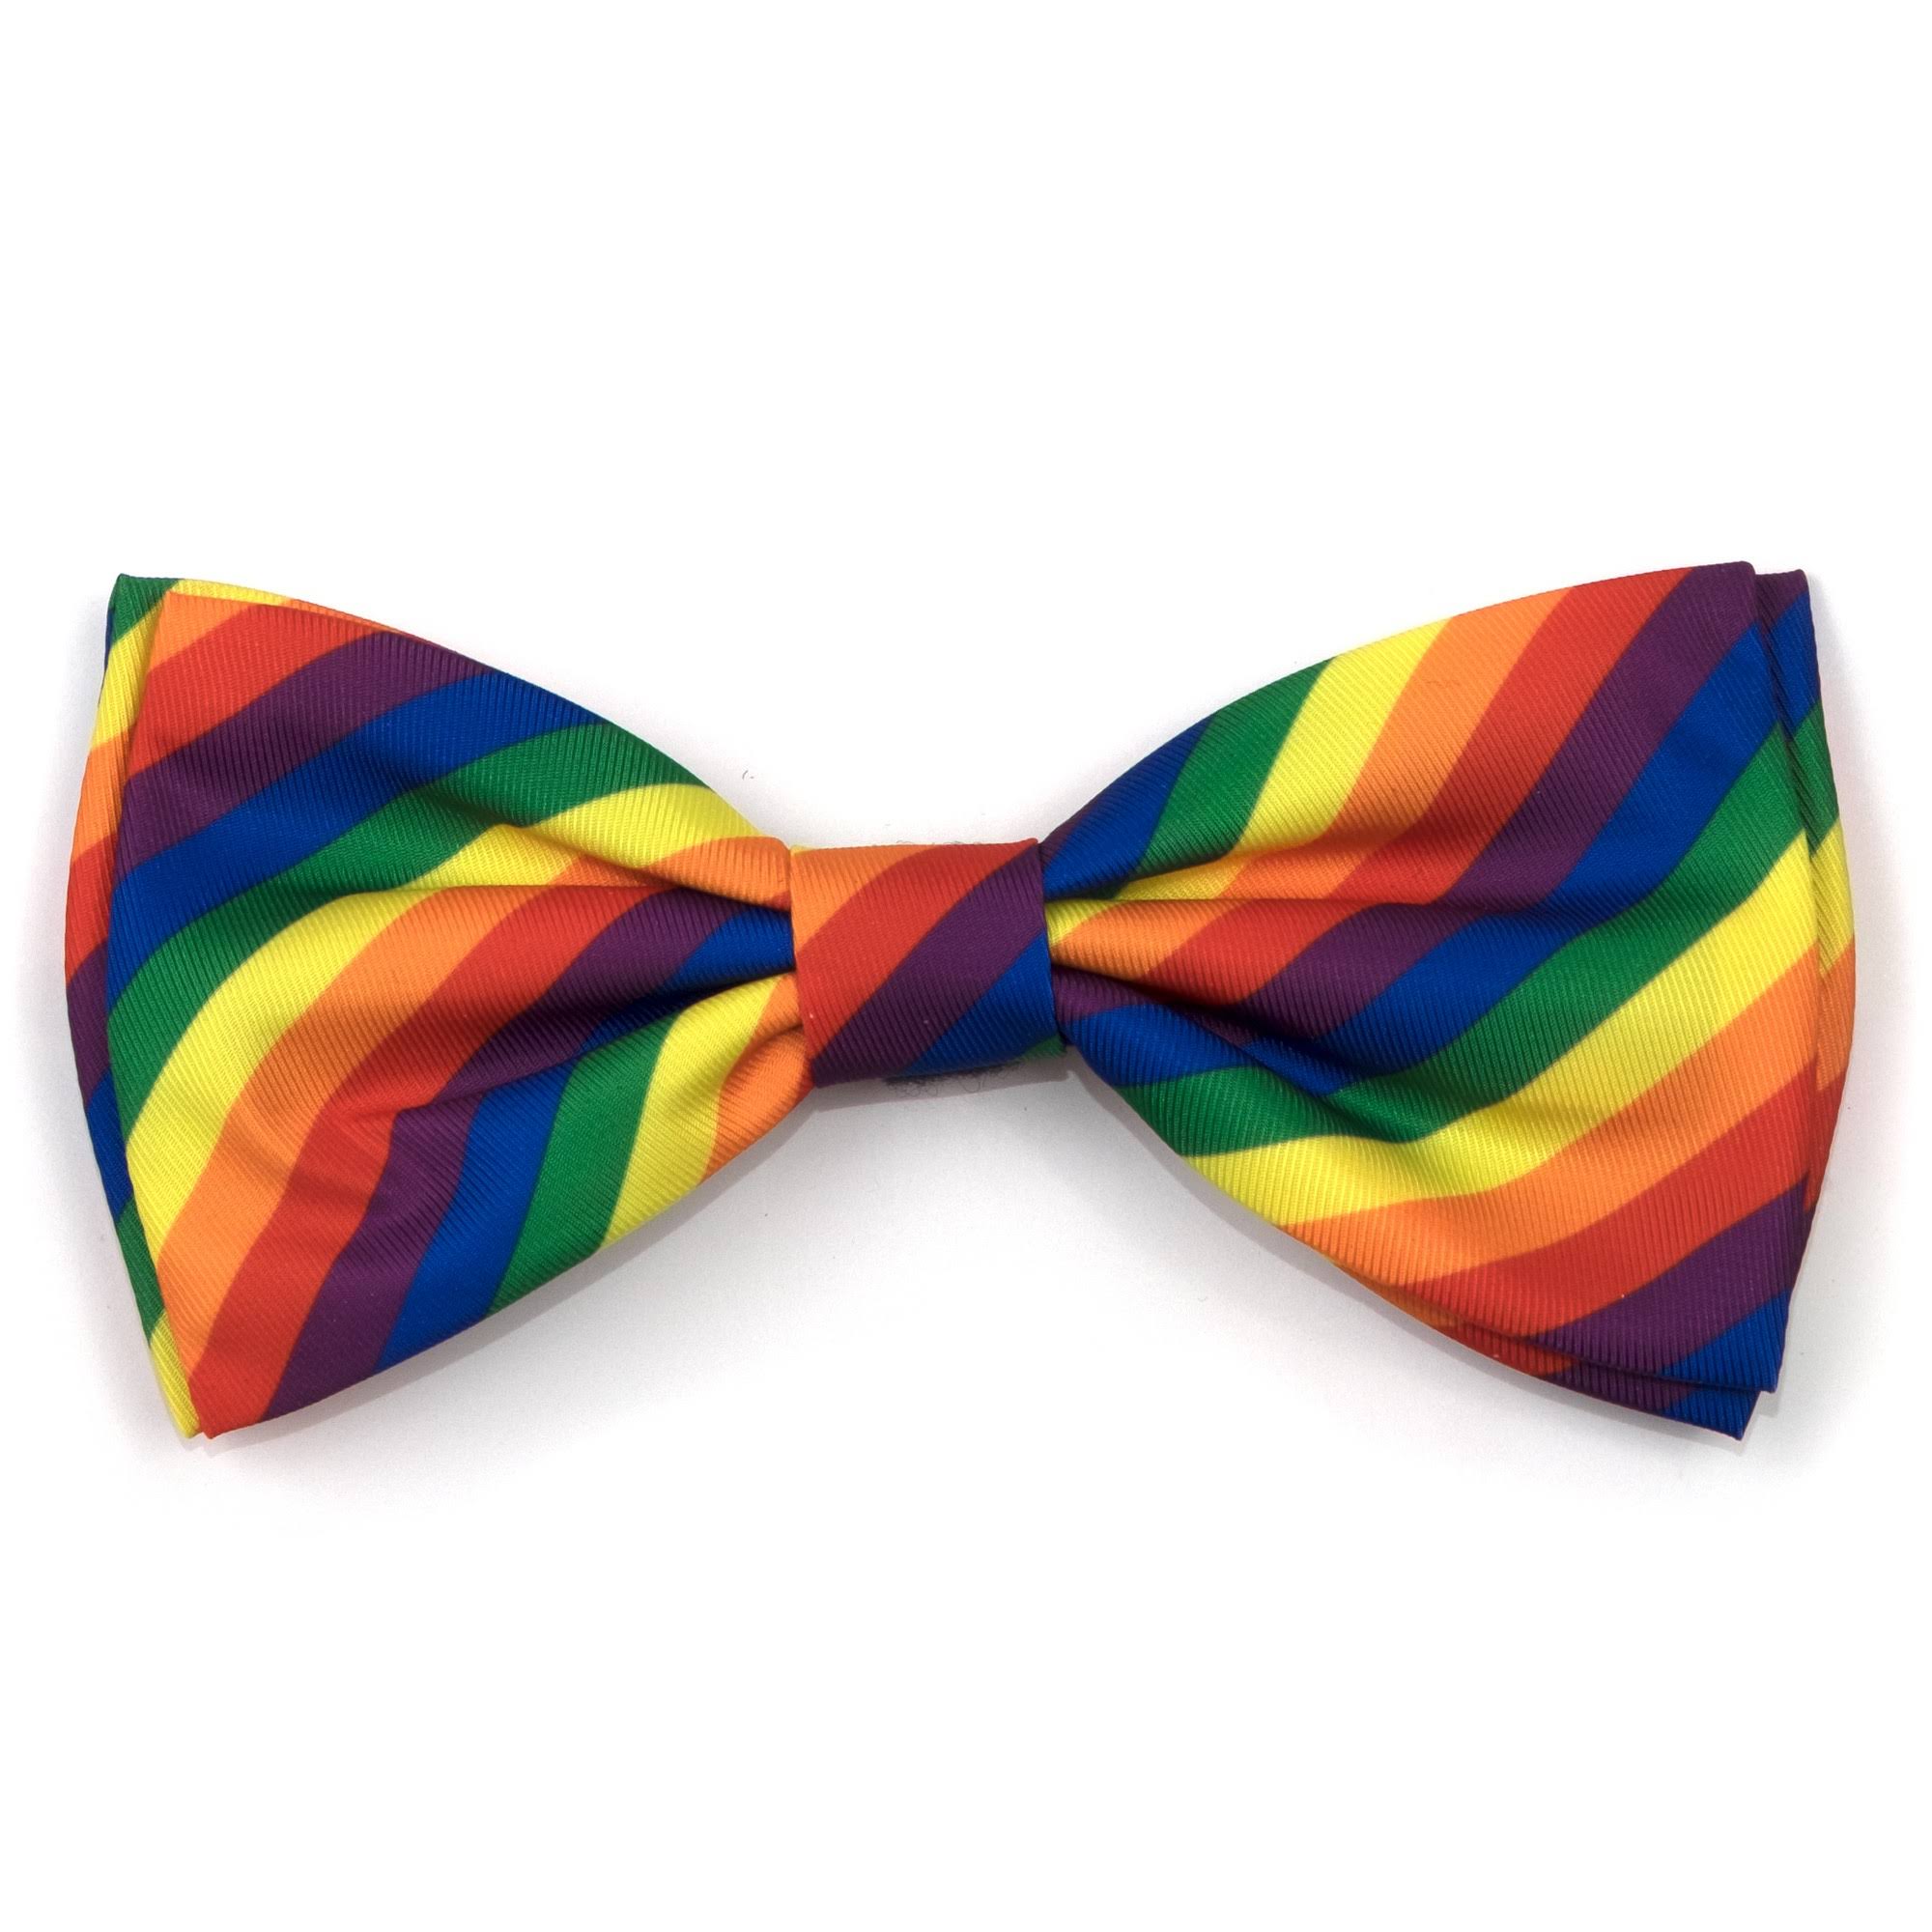 The Worthy Dog Rainbow Bow Tie